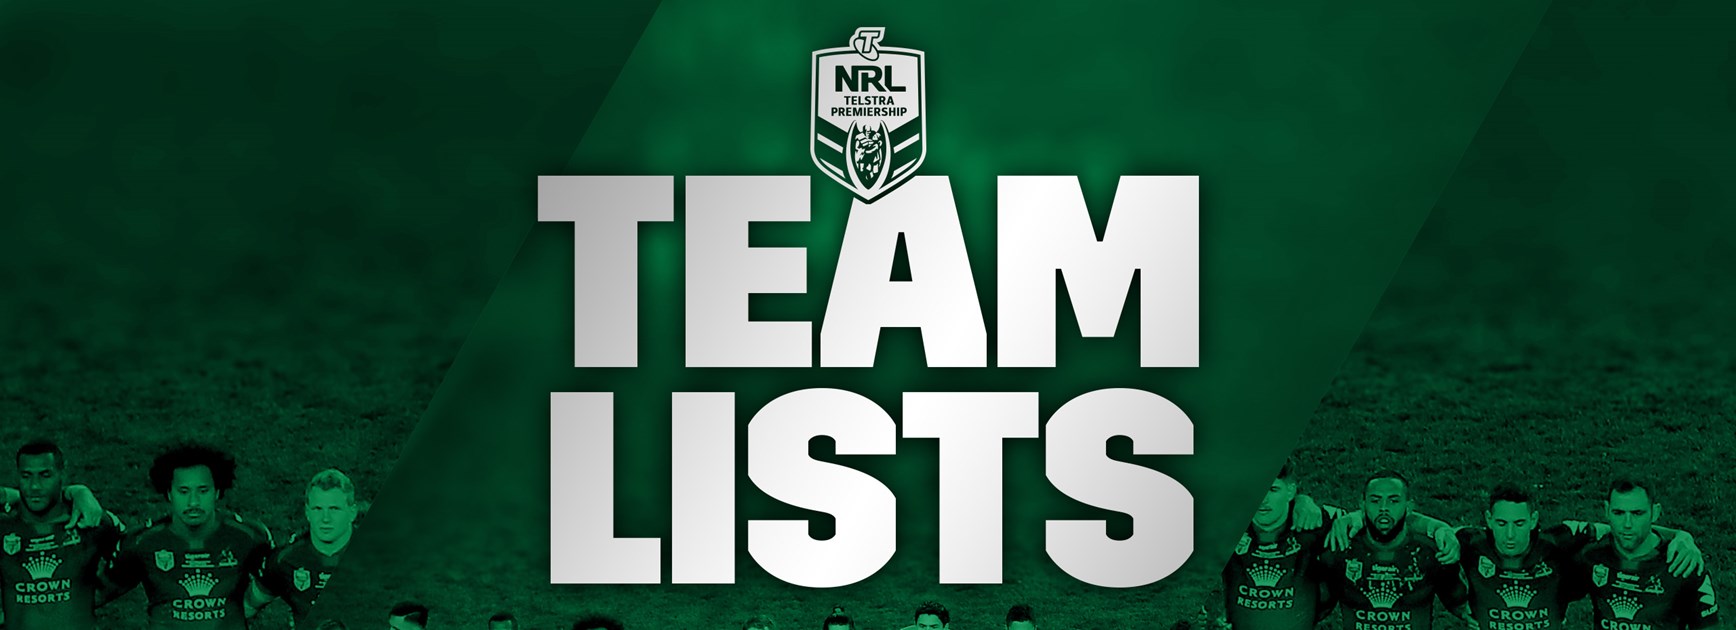 Round 4 NRL team lists